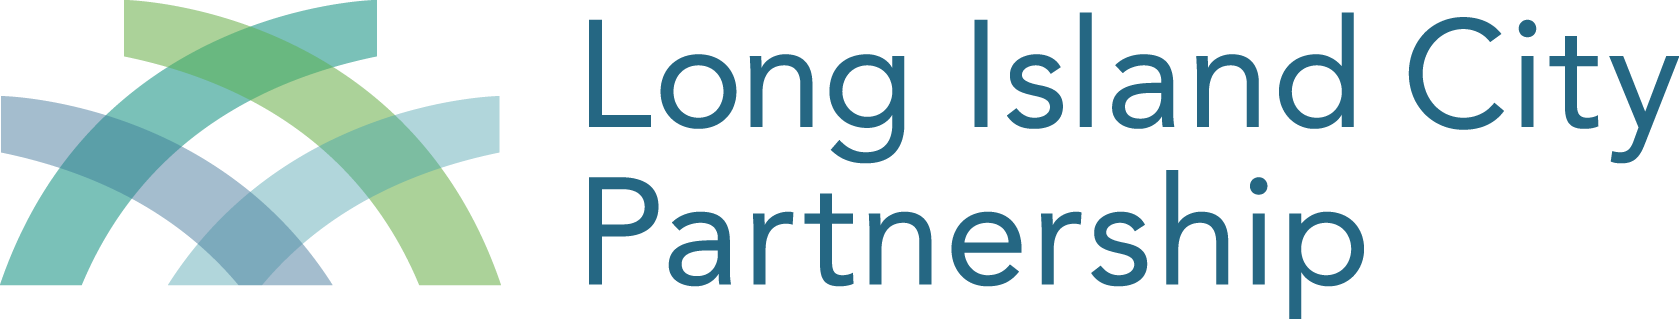 Long Island City Partnership logo